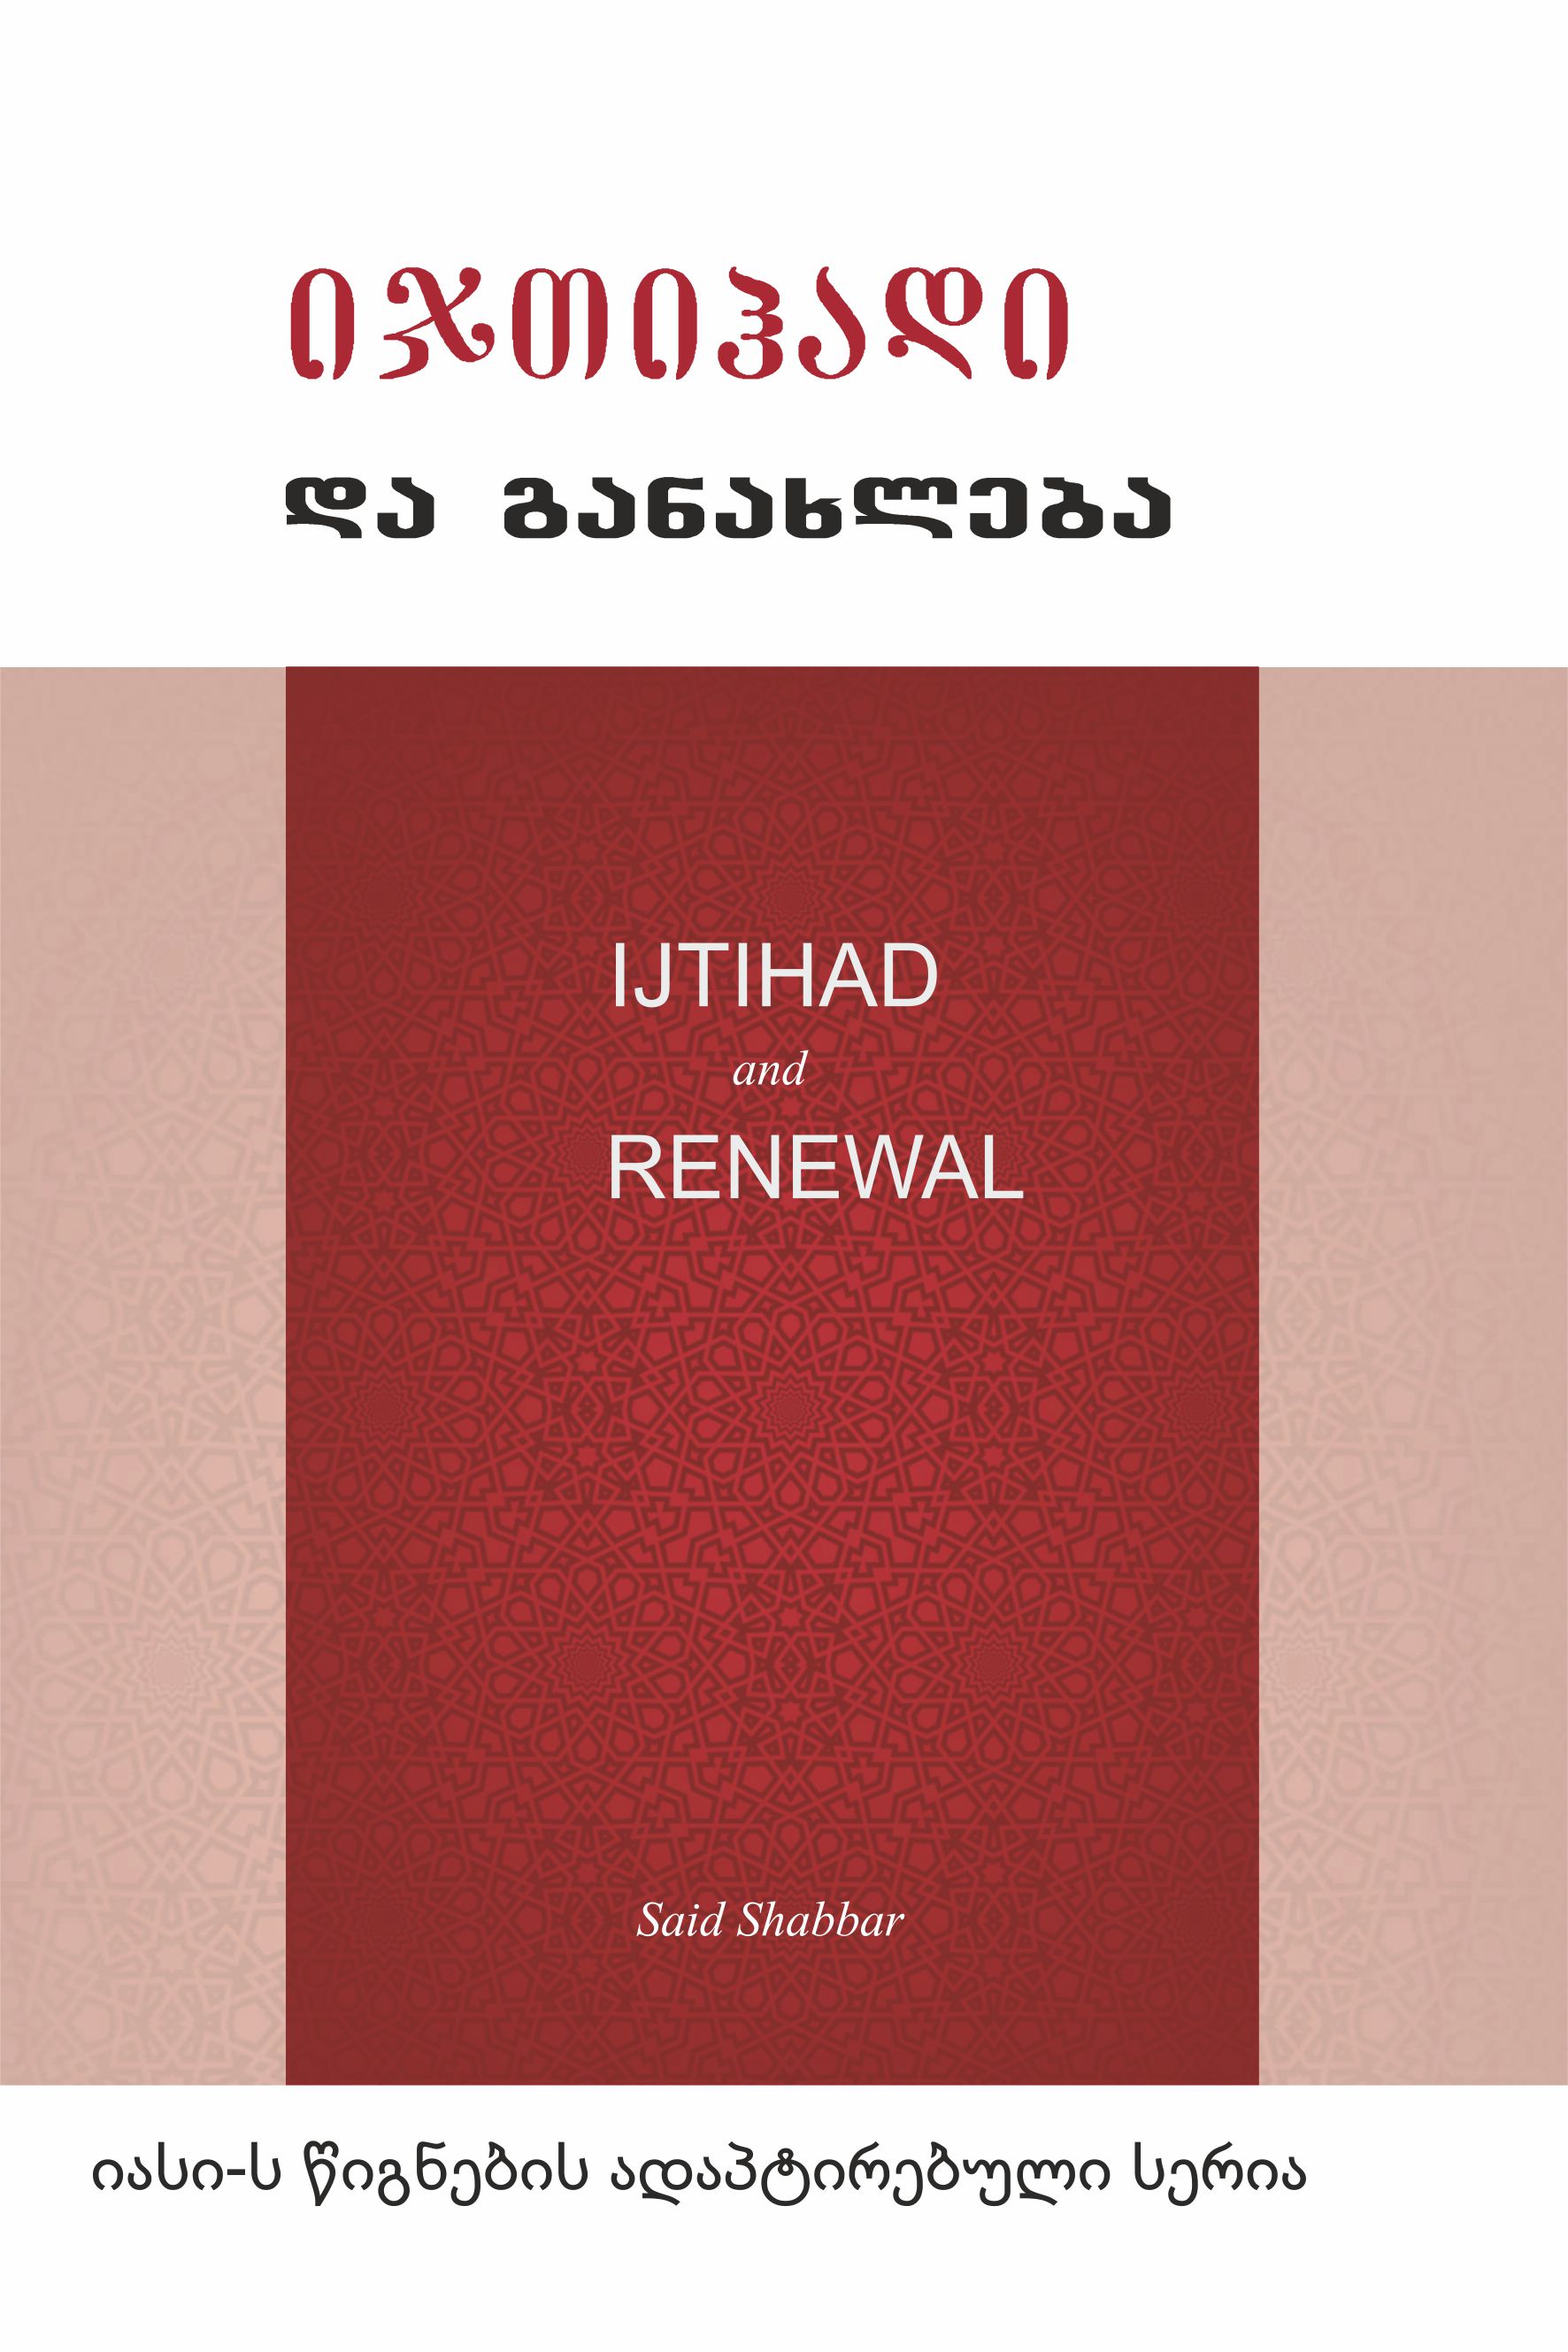 Ijtihad and Renewal by Said Shabbar